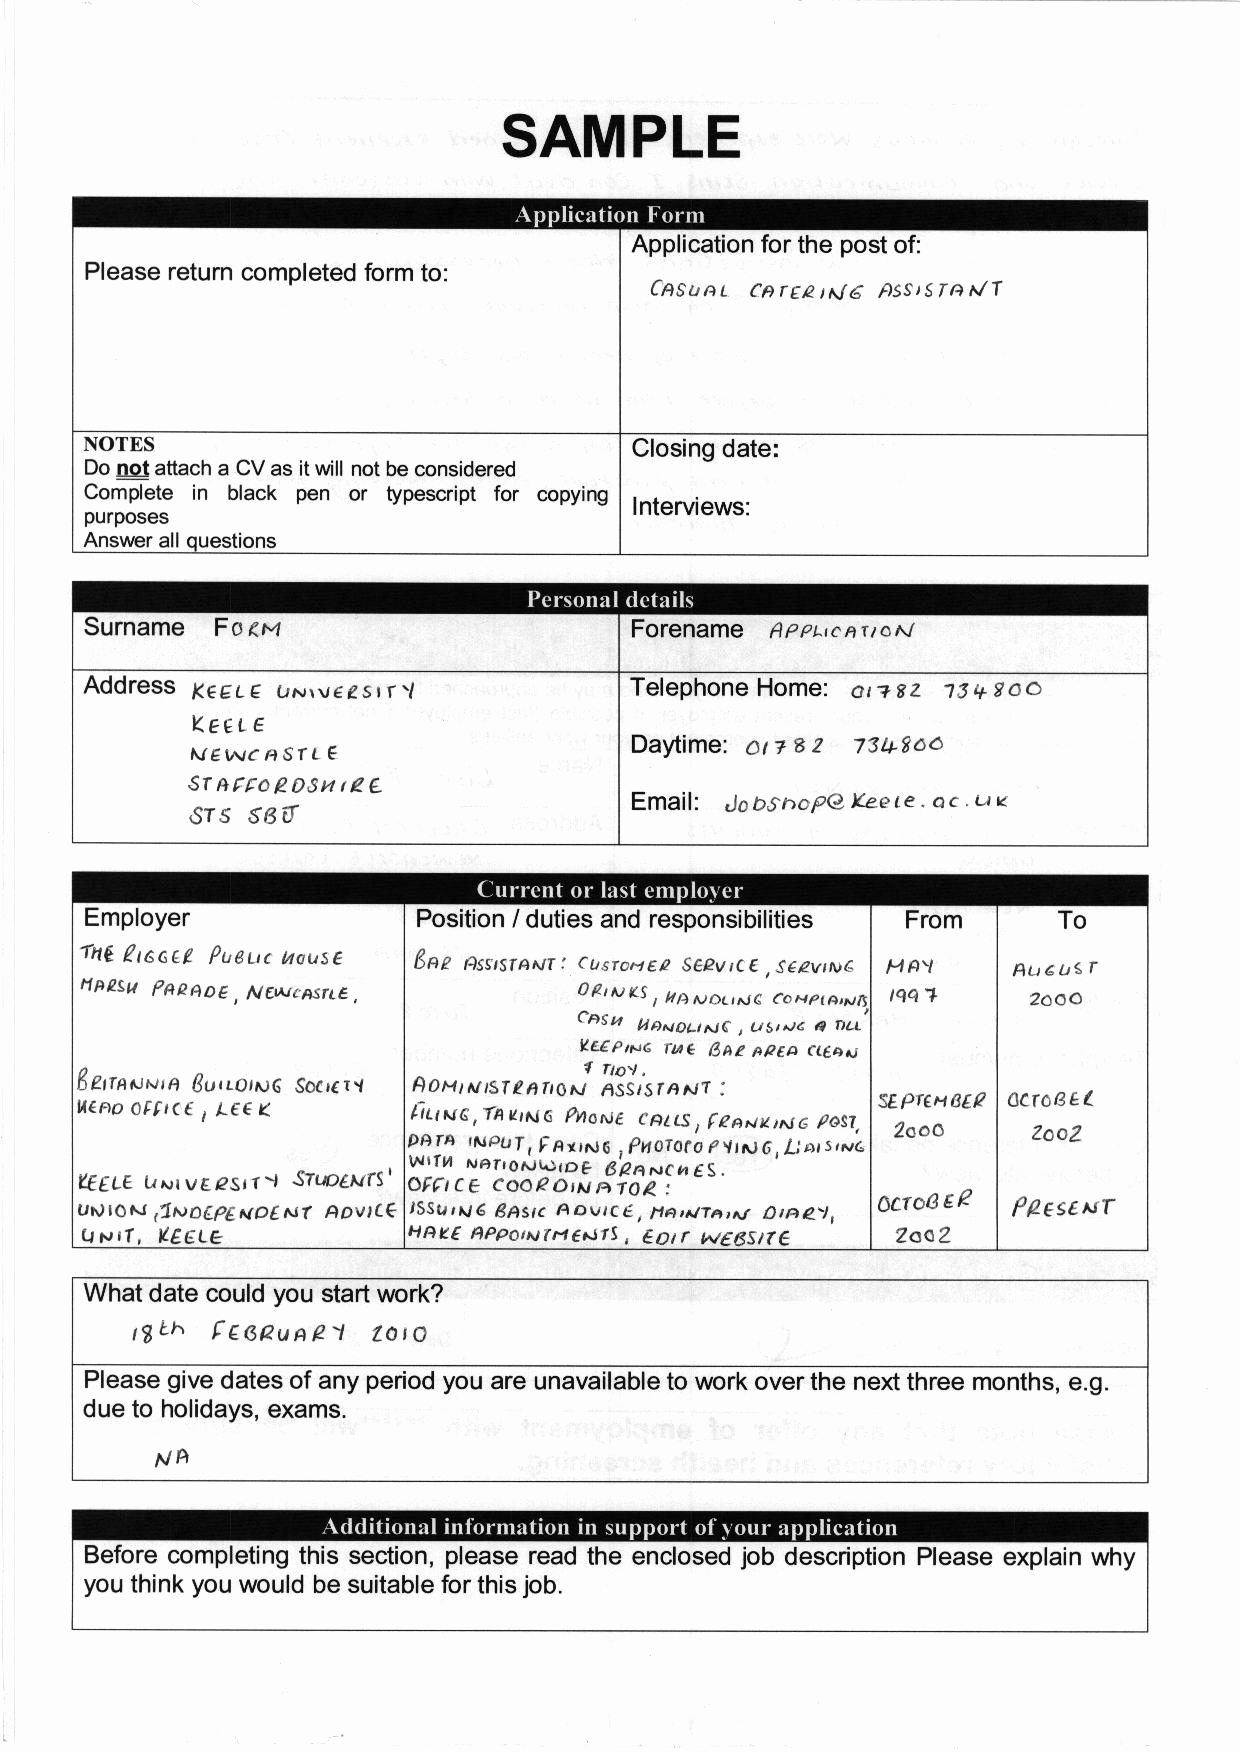 Sample Job Application form Beautiful Application forms